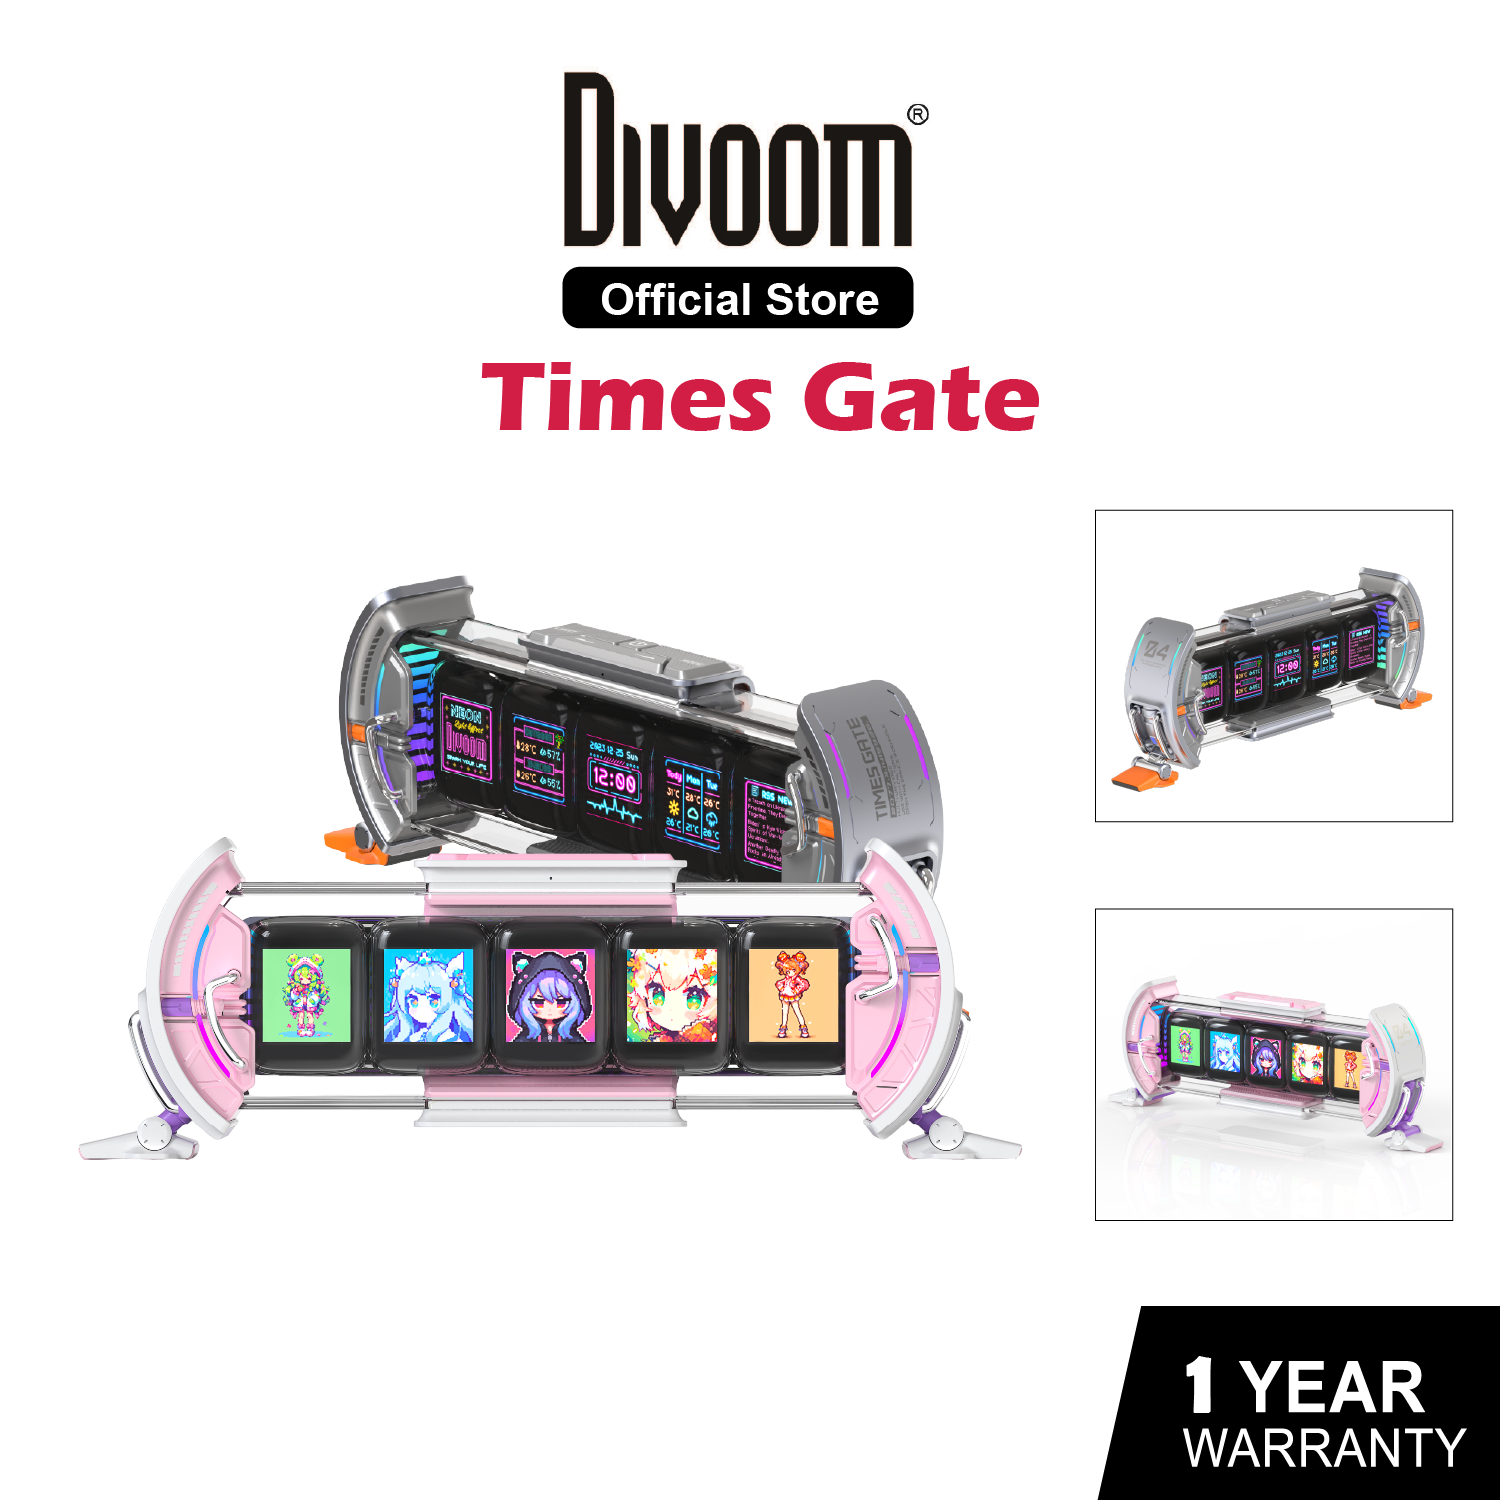 Divoom Times Gate - Pixel Art Informative LED Display, 1 Year Warranty